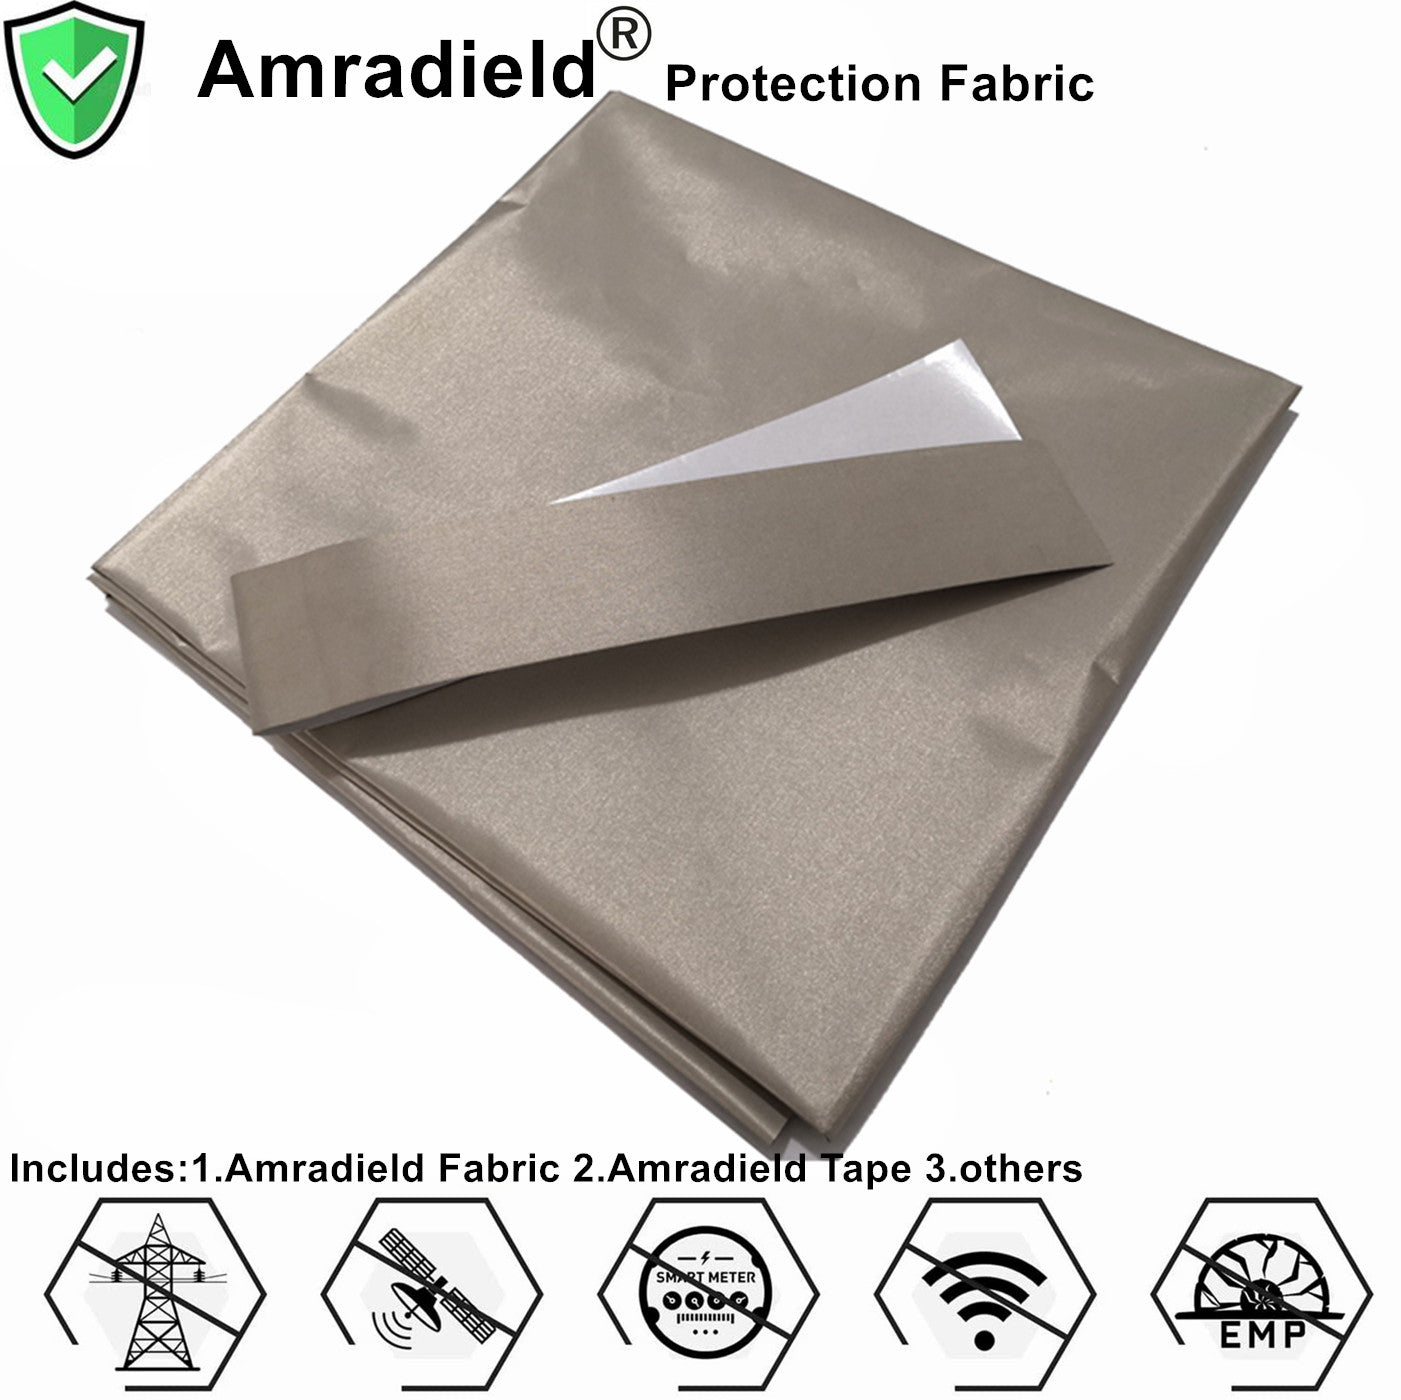 10m EMF Shielding Fabric Military Grade Anti Radiation Protection Faraday  fabric-197inX57in - Fabric - Chicago, Illinois, Facebook Marketplace